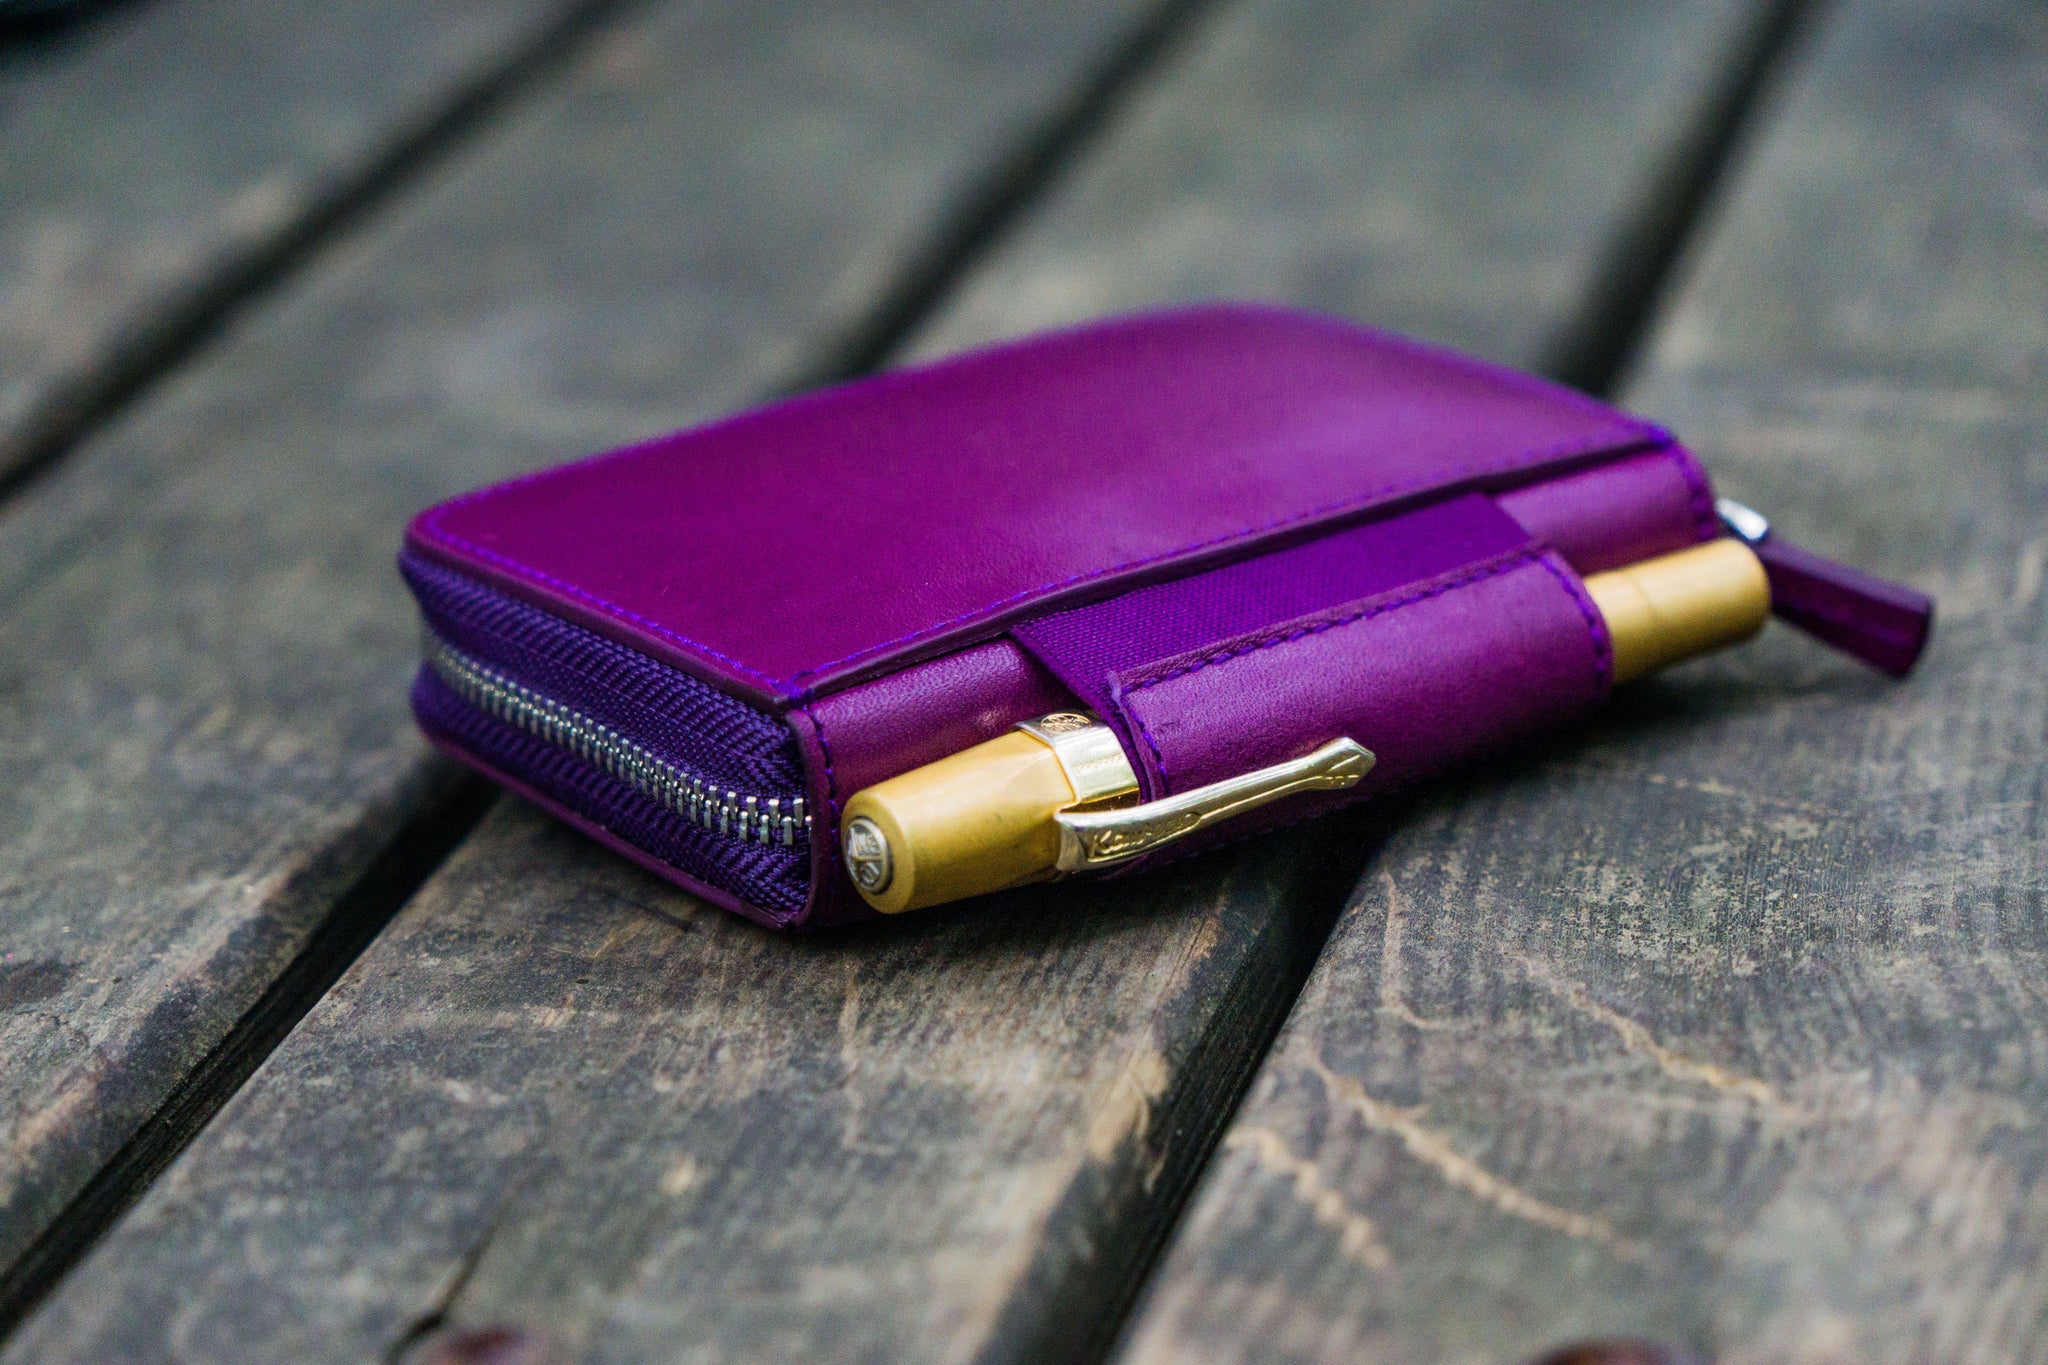 XLarge Zipper Leather Pencil Case - Purple